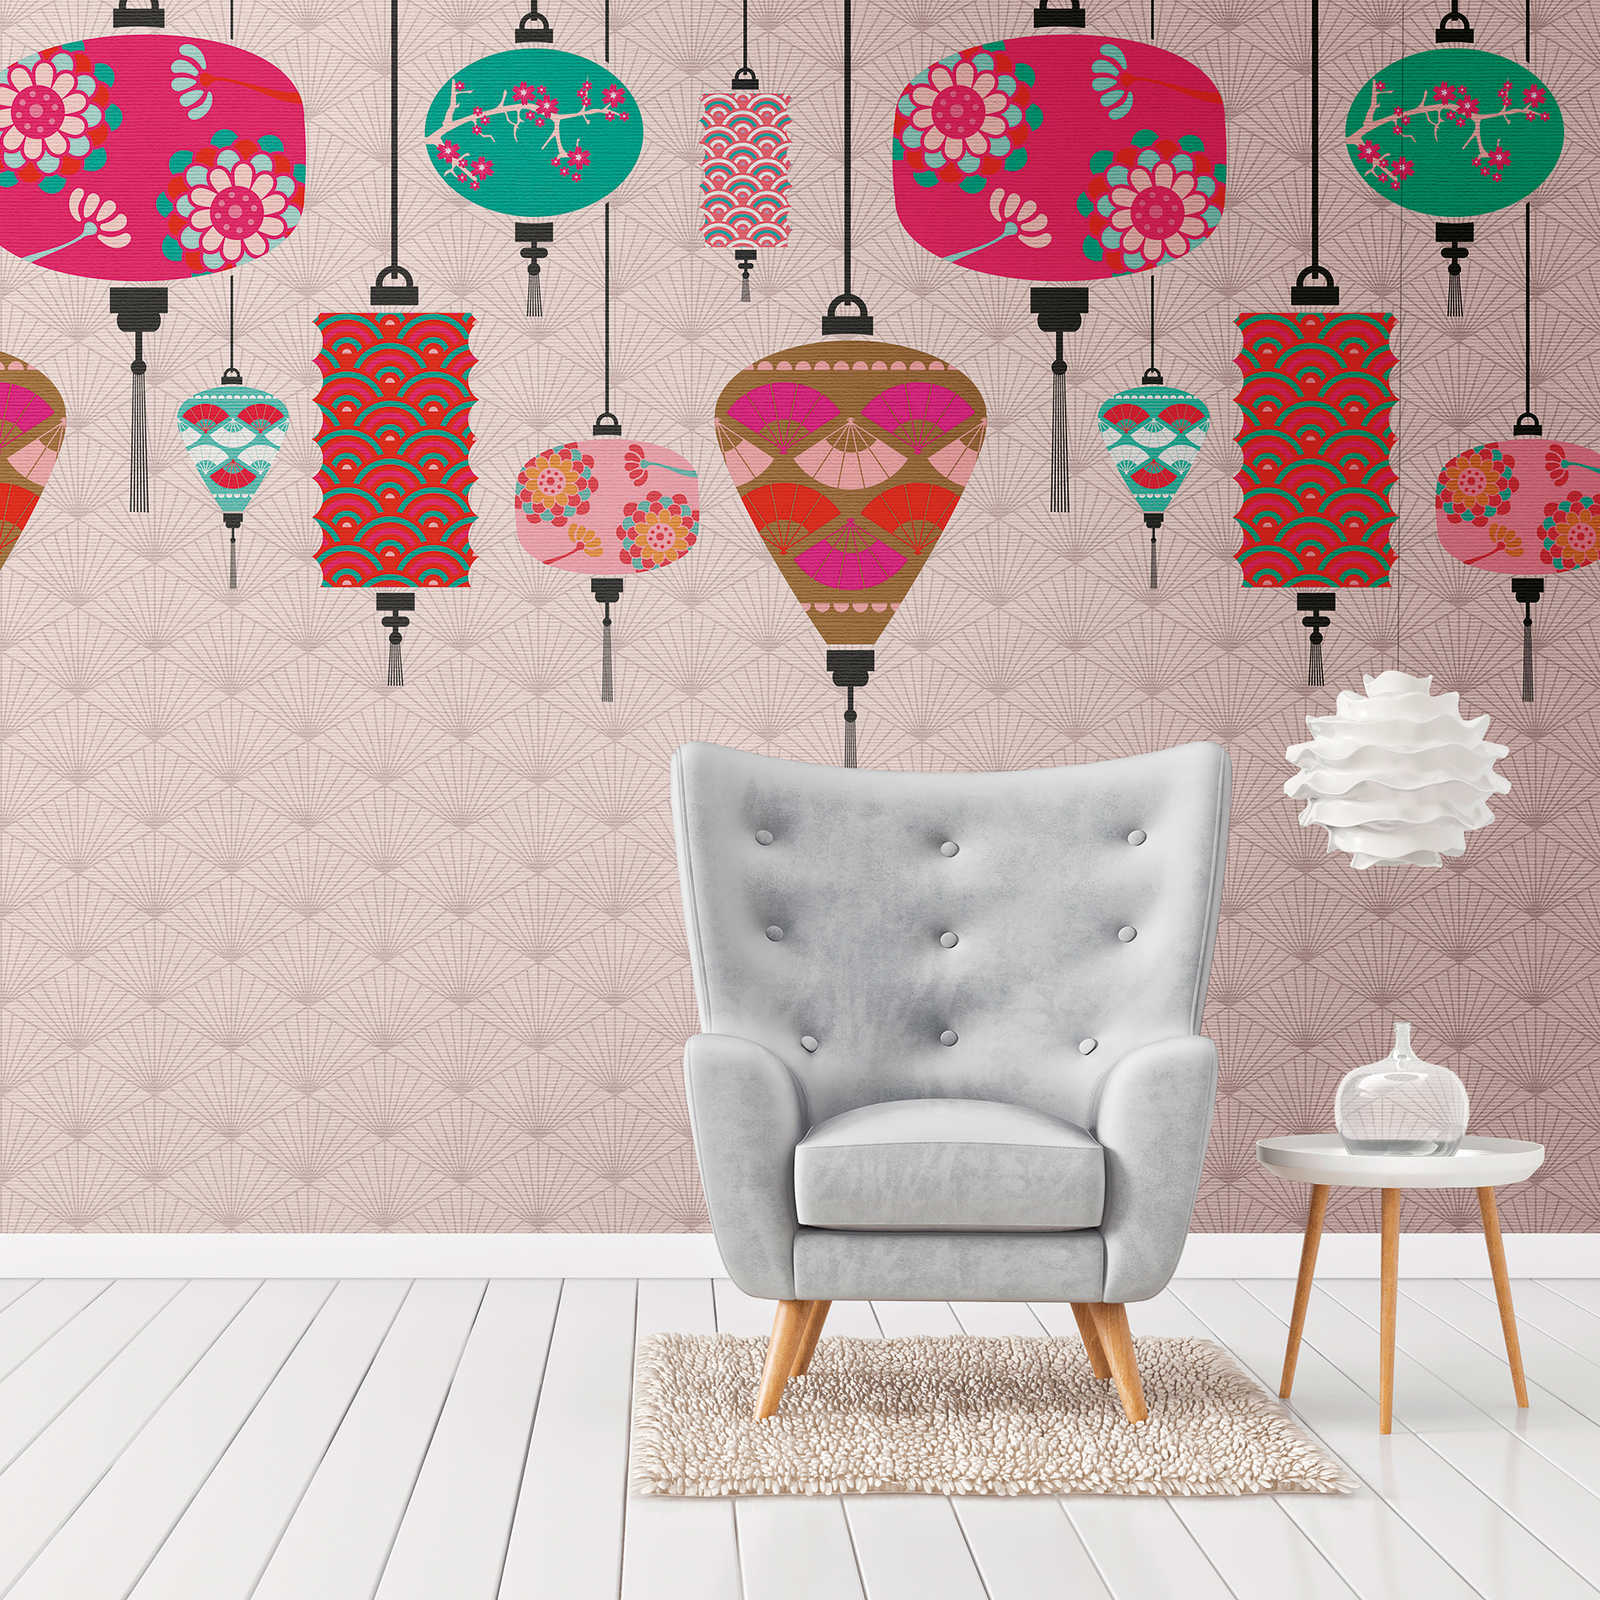 Wallpaper novelty | Asian motif wallpaper with colourful lanterns
